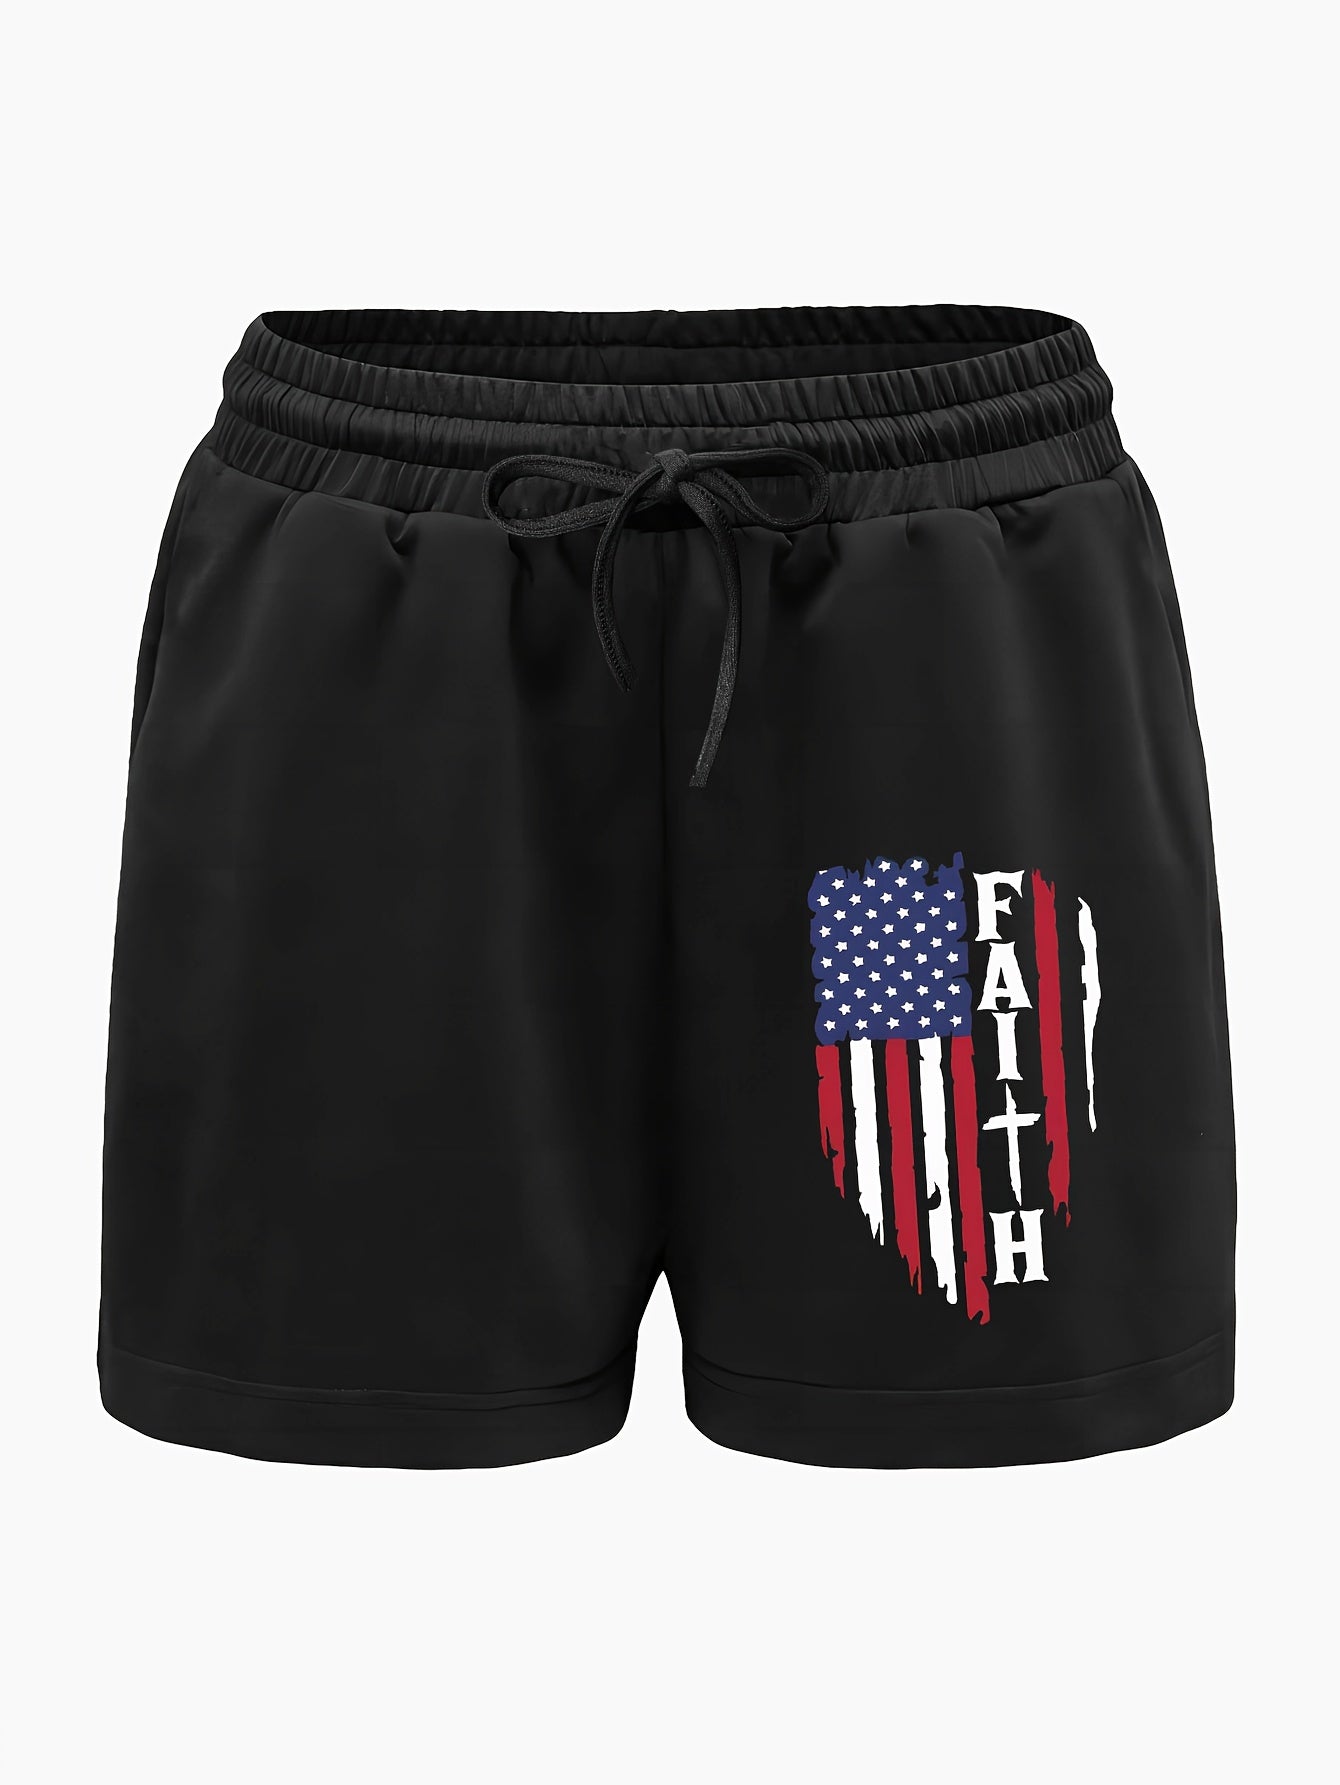 Faith (American Flag Patriotic) Women's Christian Shorts claimedbygoddesigns